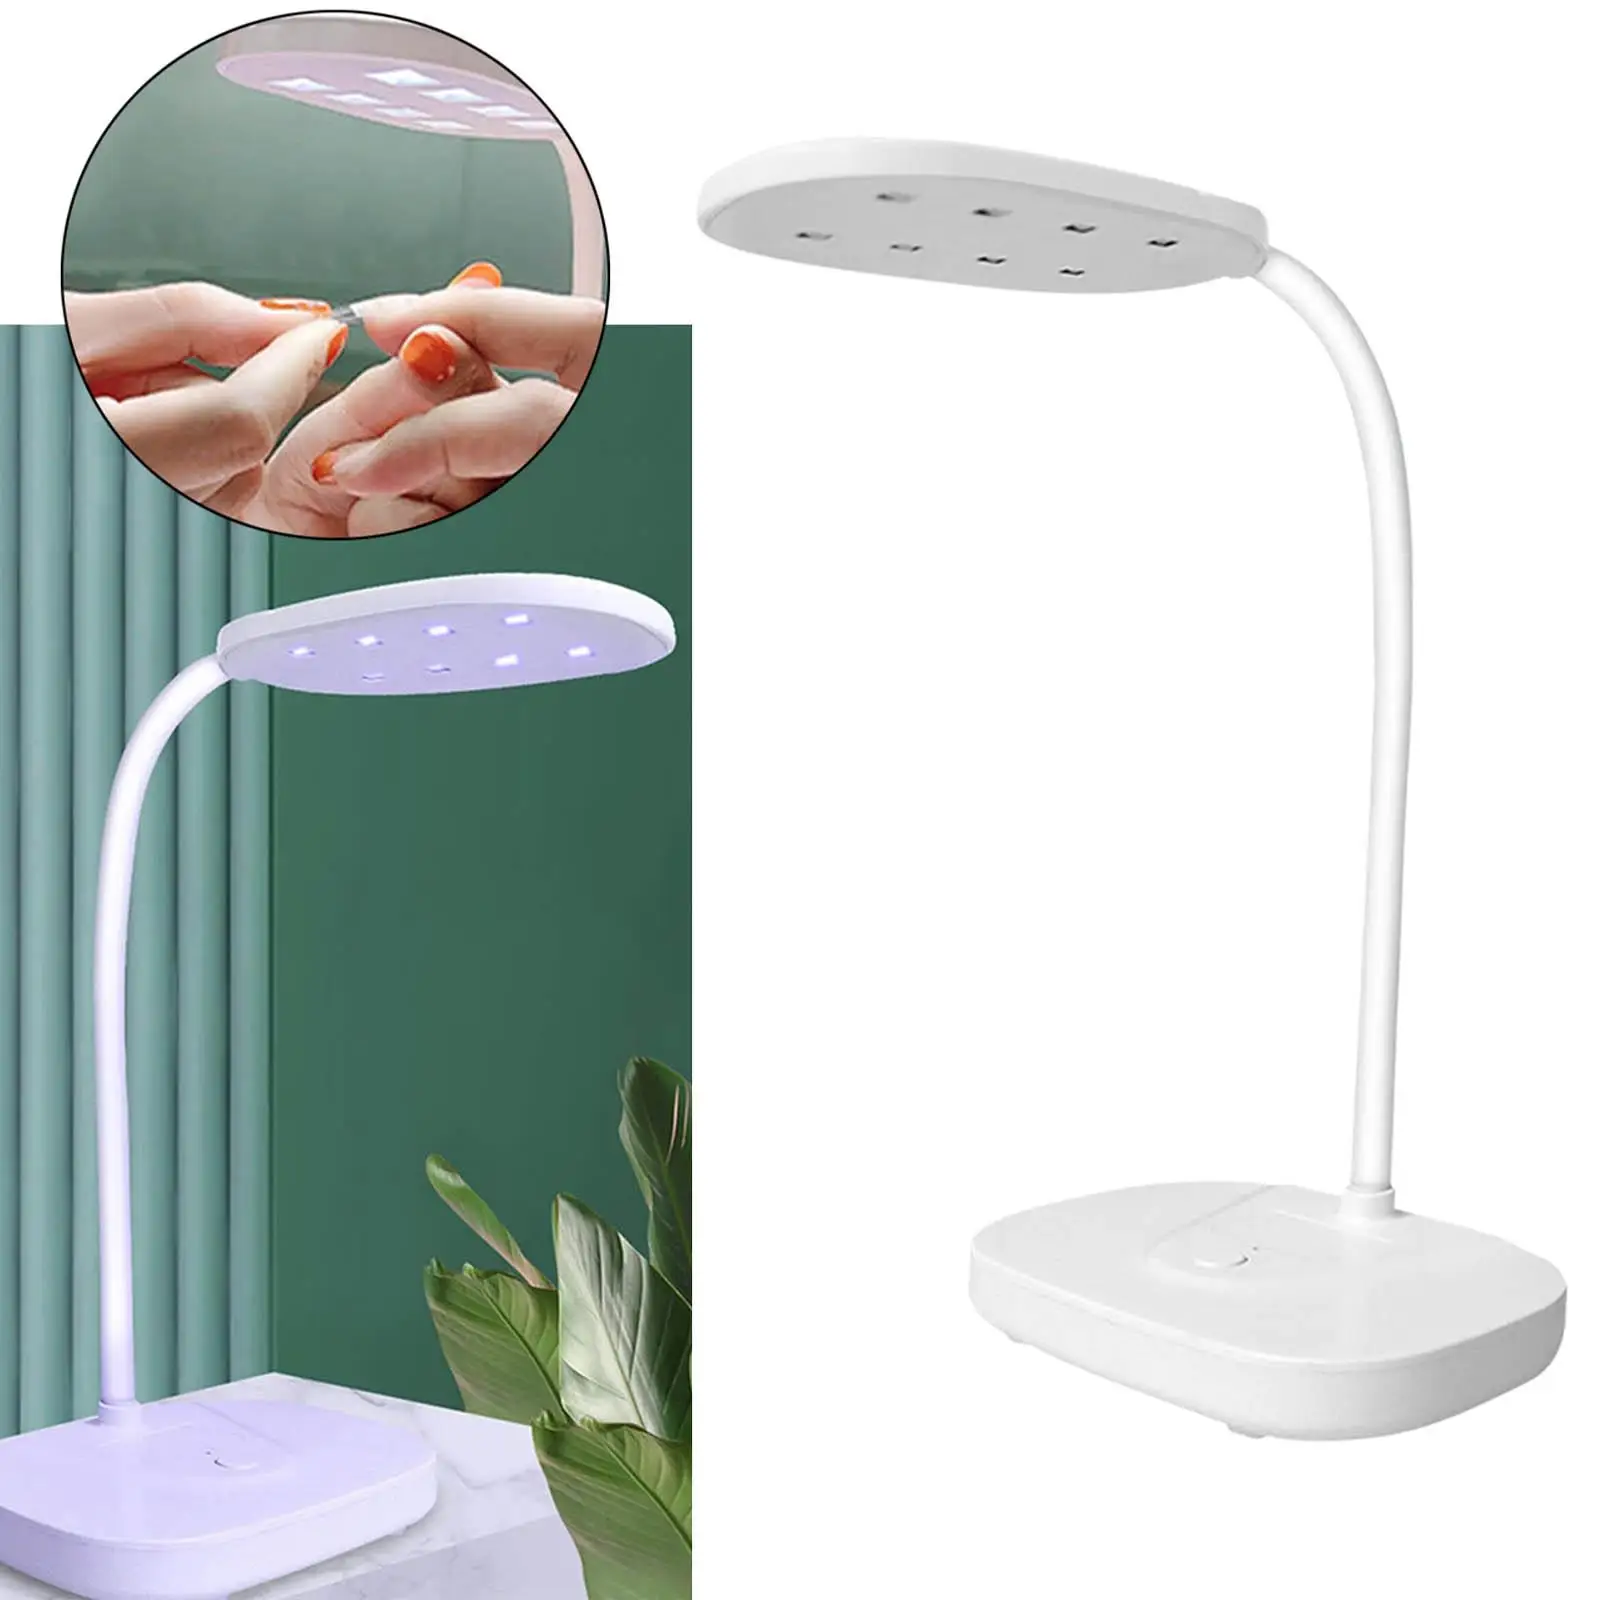 LED Nail Lamp Foldable Beauty Accessories Lightweight Portable Heating Light for Gel Nails Nail Art Salon Supplies Girls Women